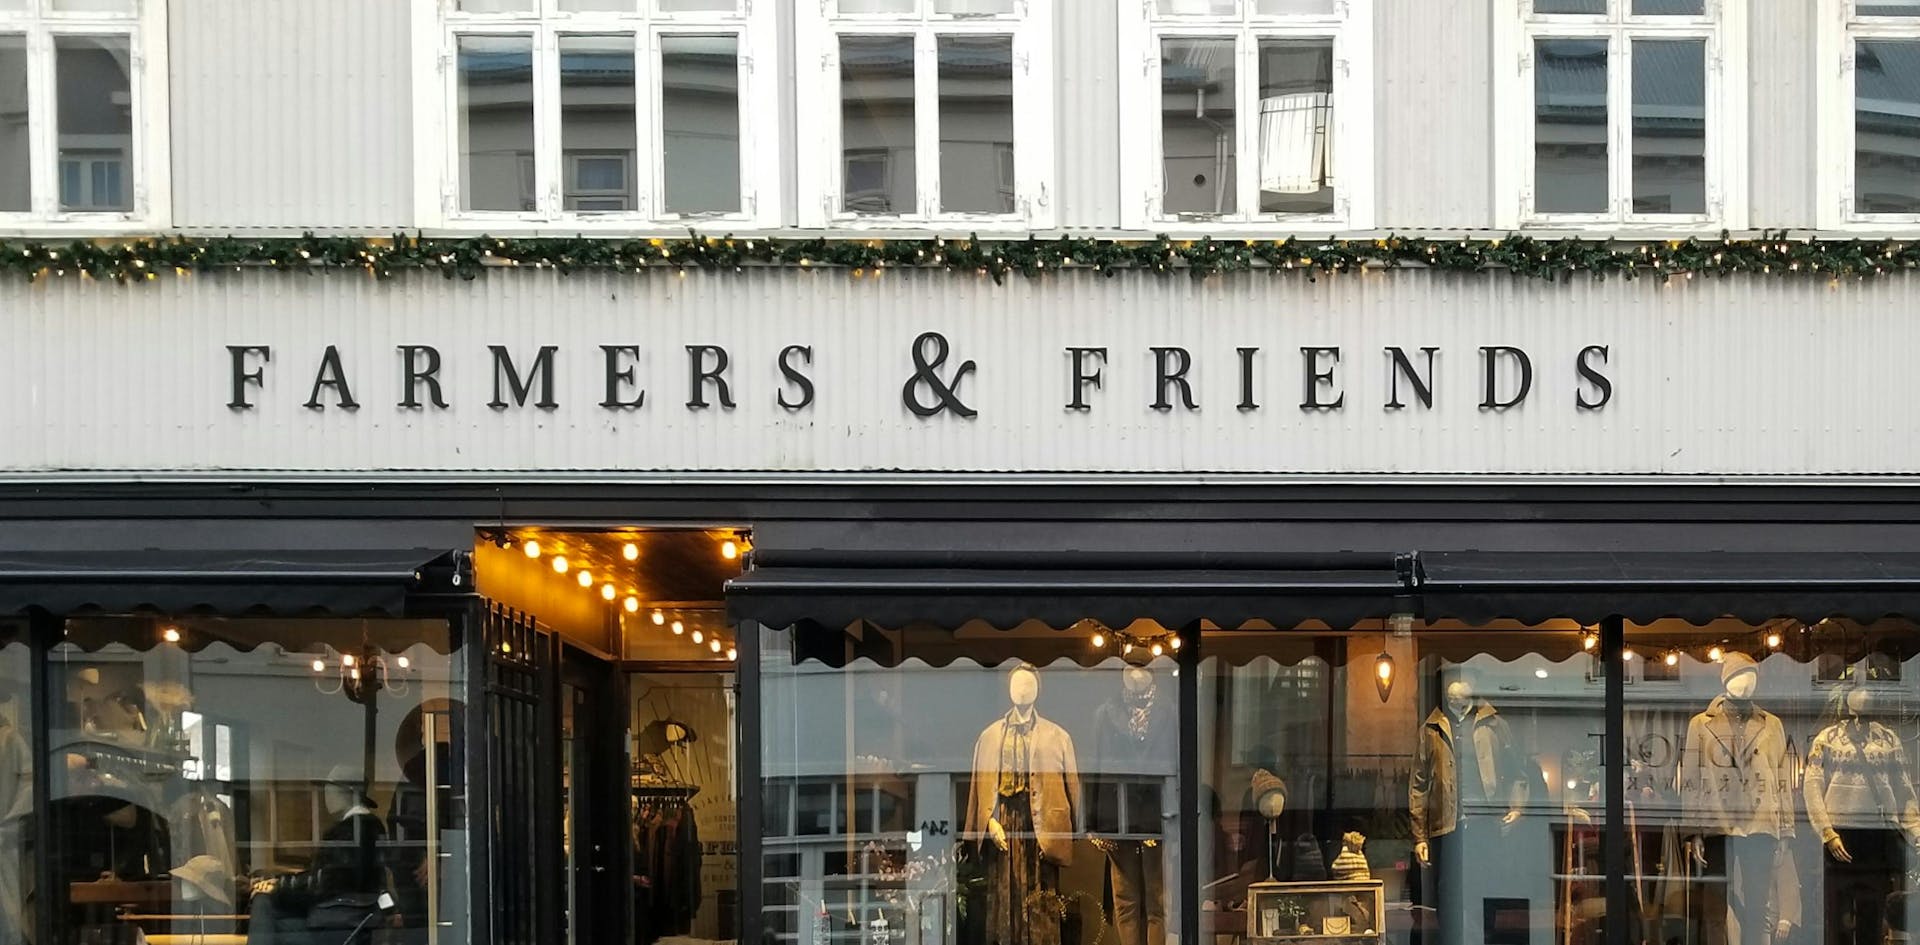 Farmers & Friends storefront